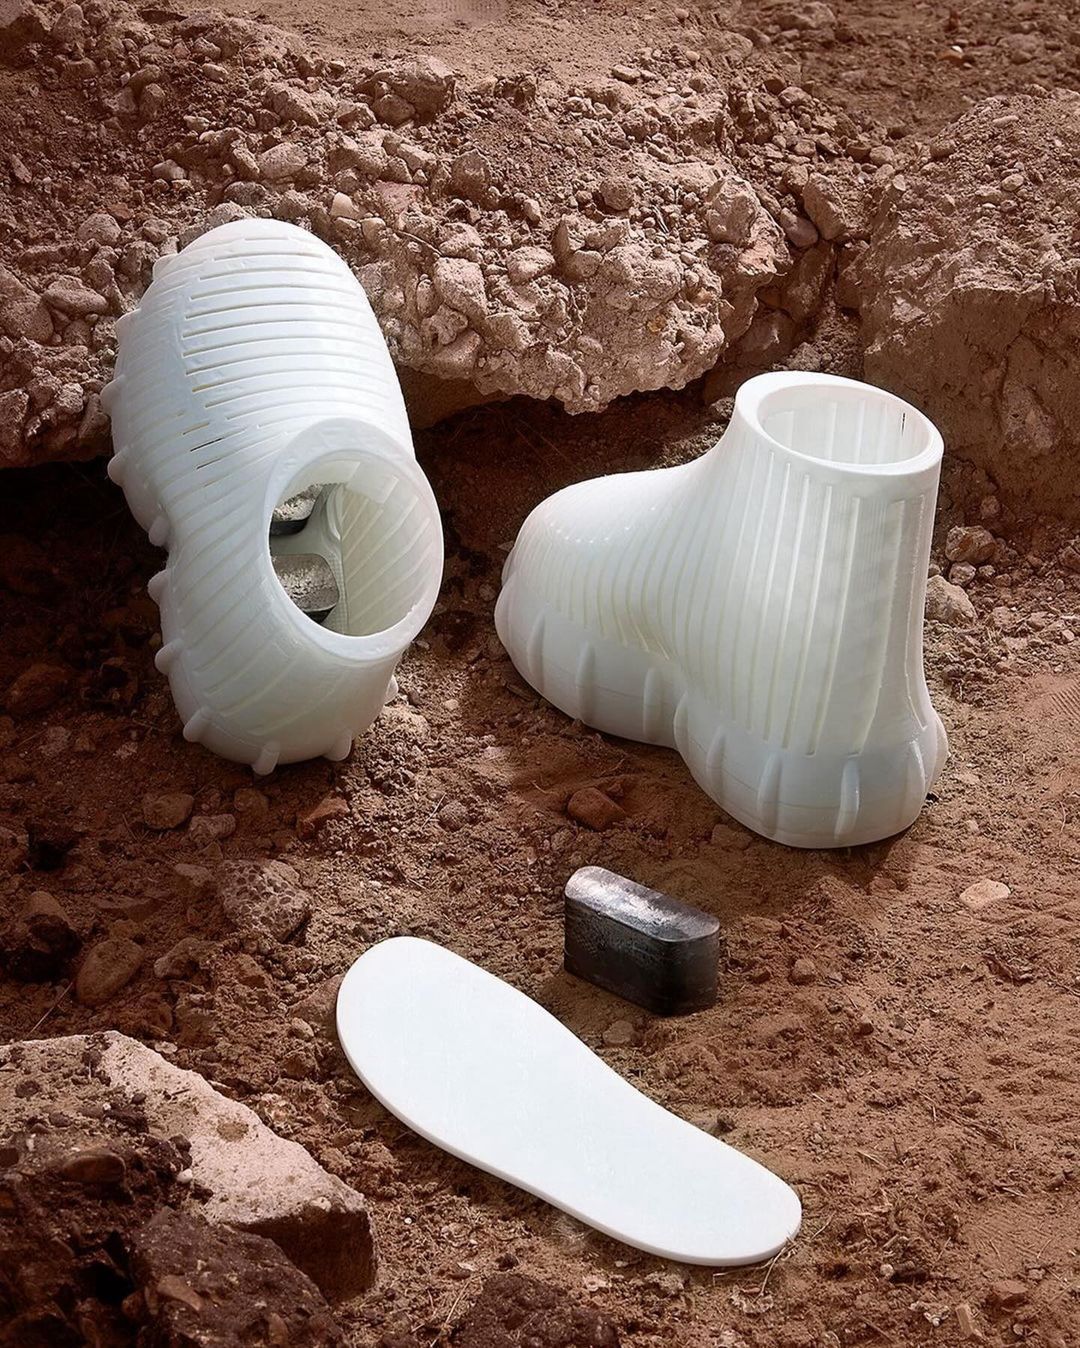 3D Printed Mars shoe